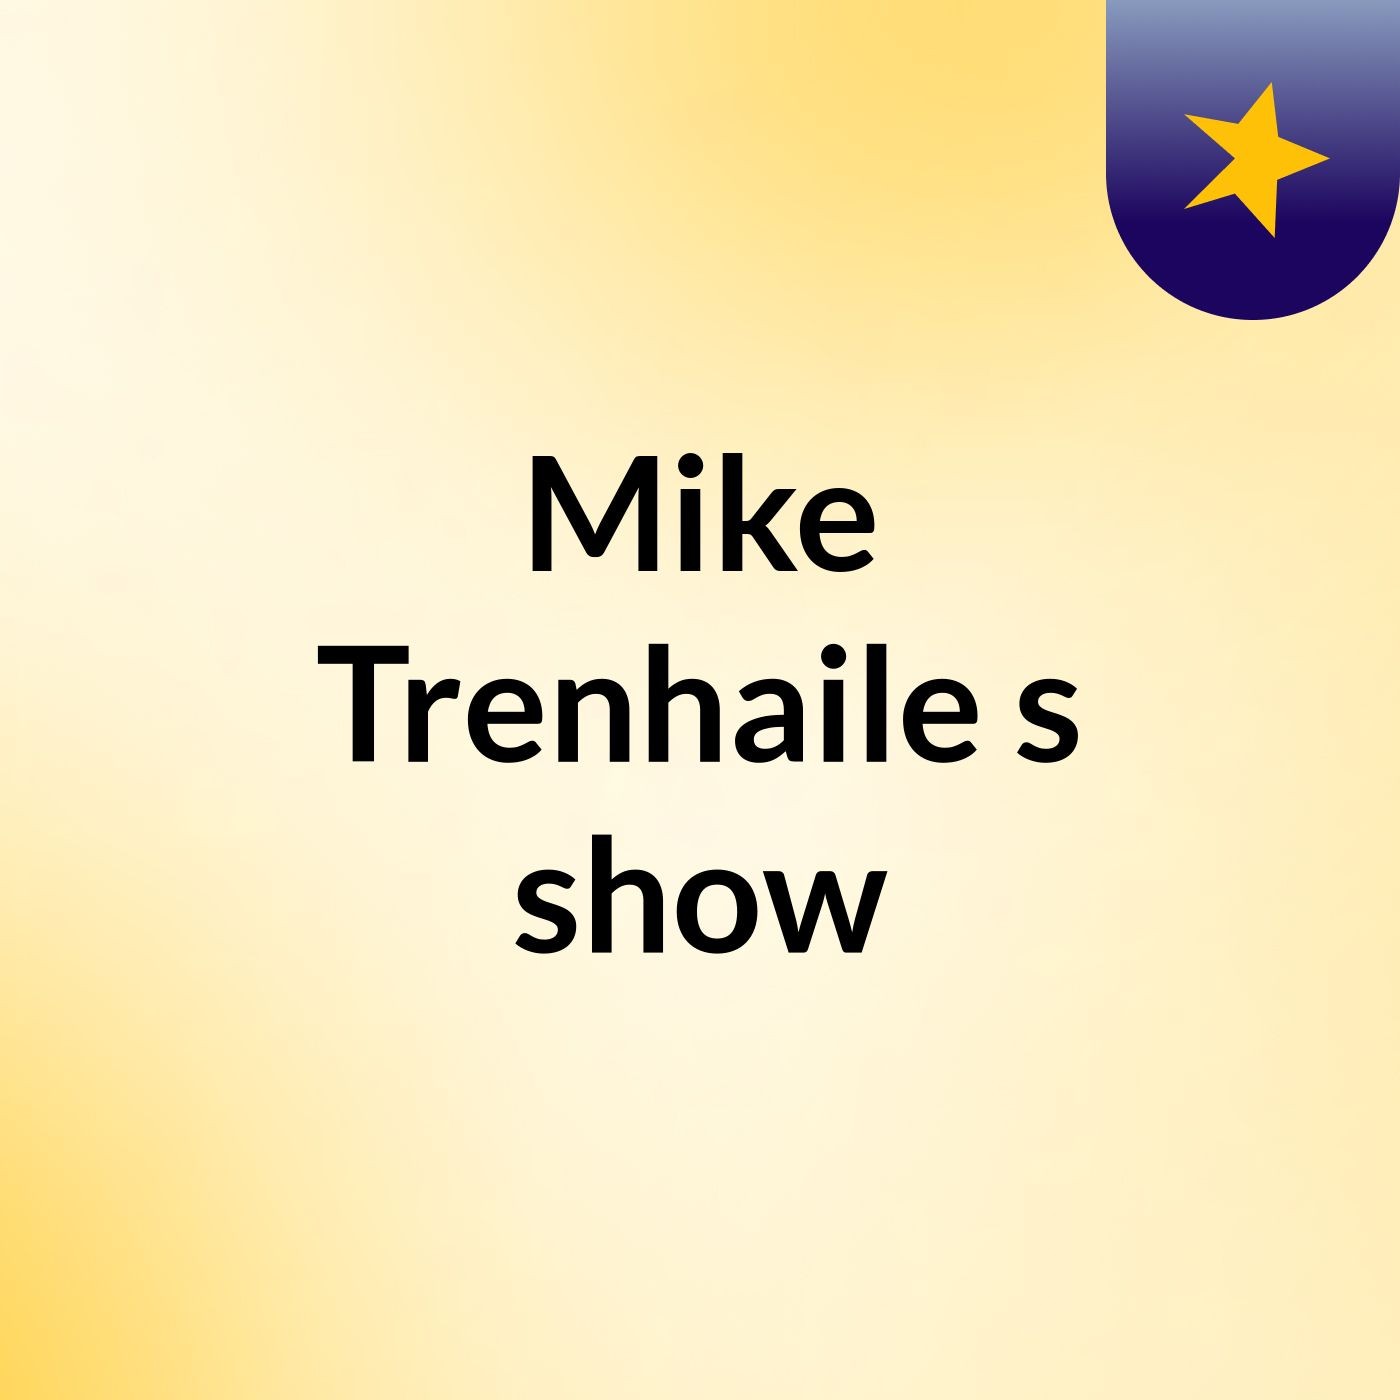 Mike Trenhaile's show